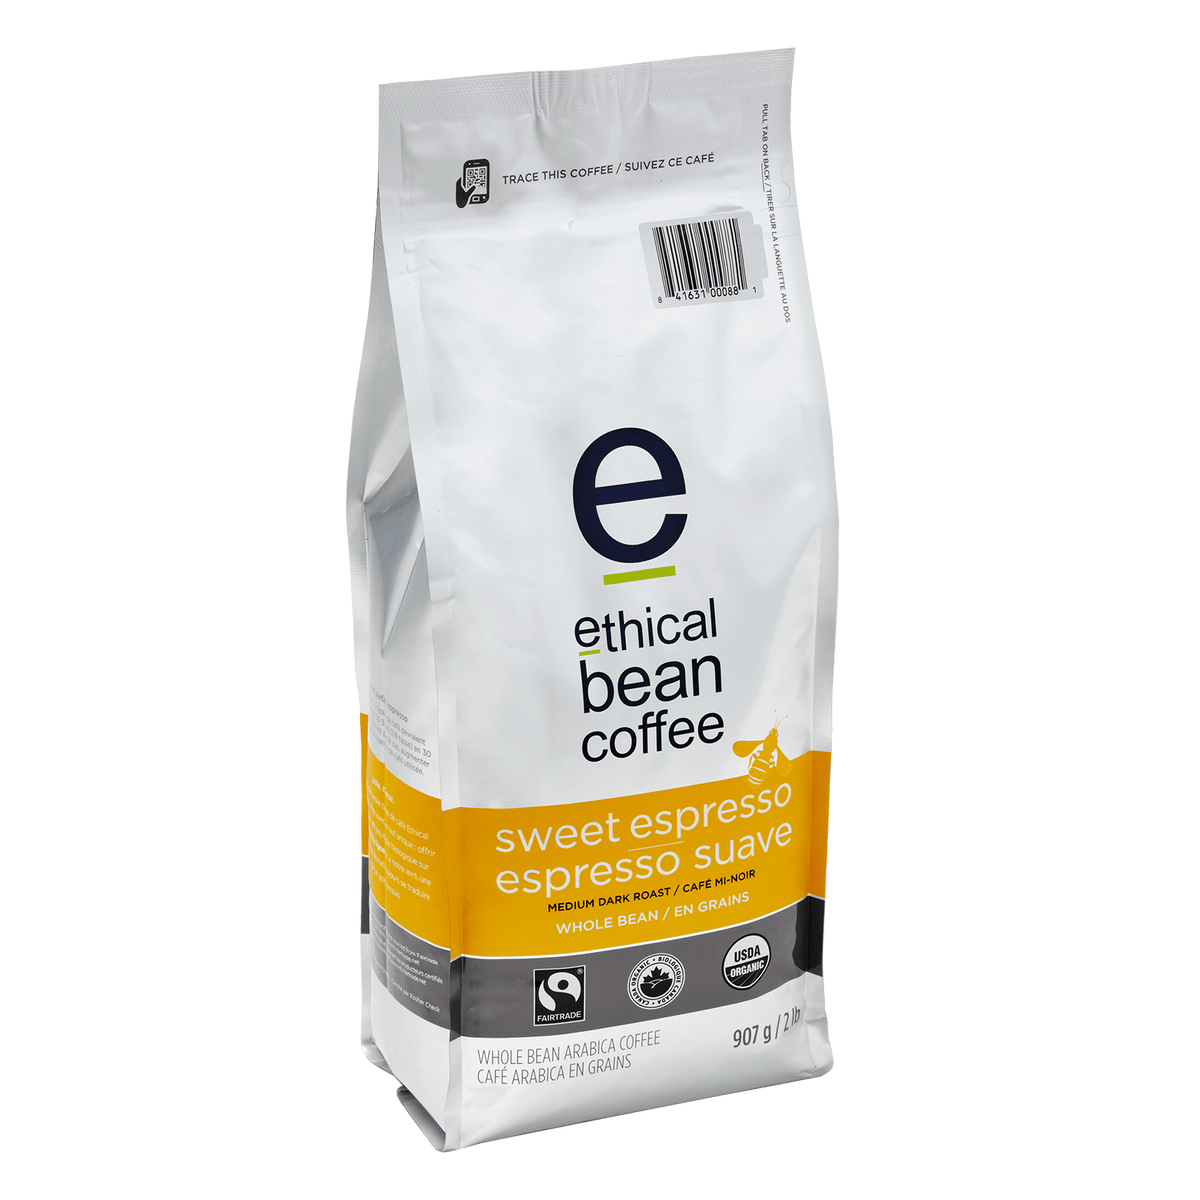 sweet espresso - whole bean 2lbs - Ethical Bean Coffee Canada